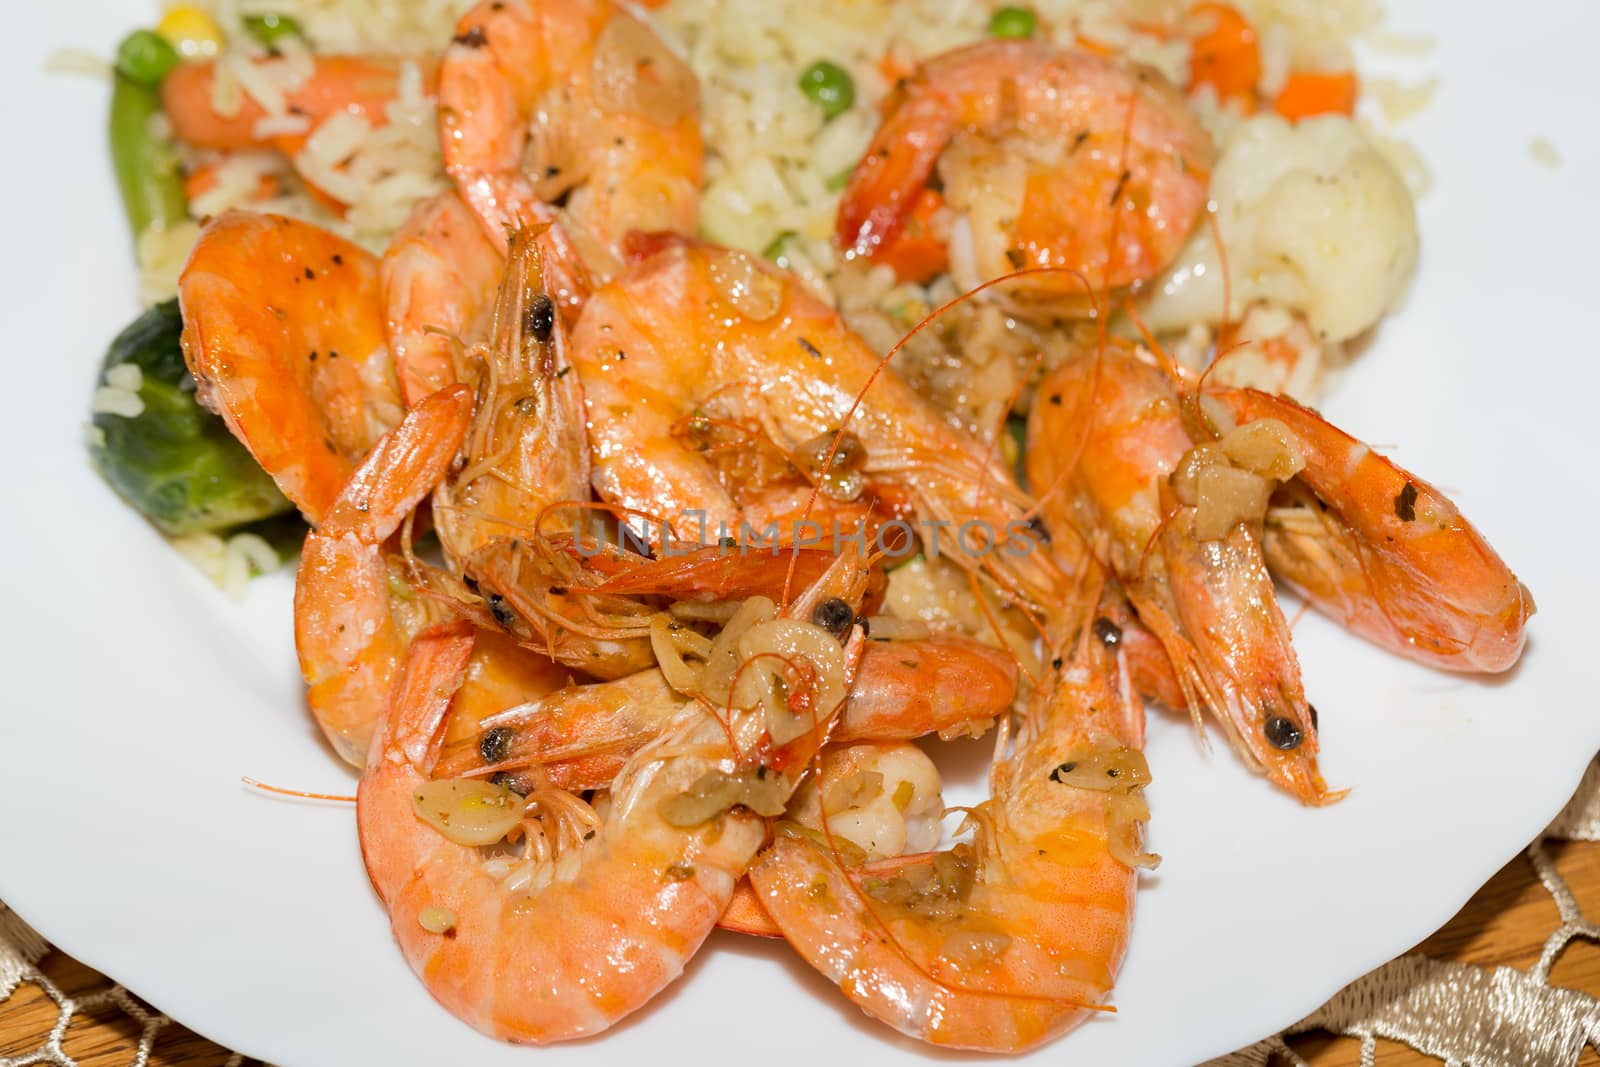 fresh gulf shrimps with garlic fried in olive oil by wjarek